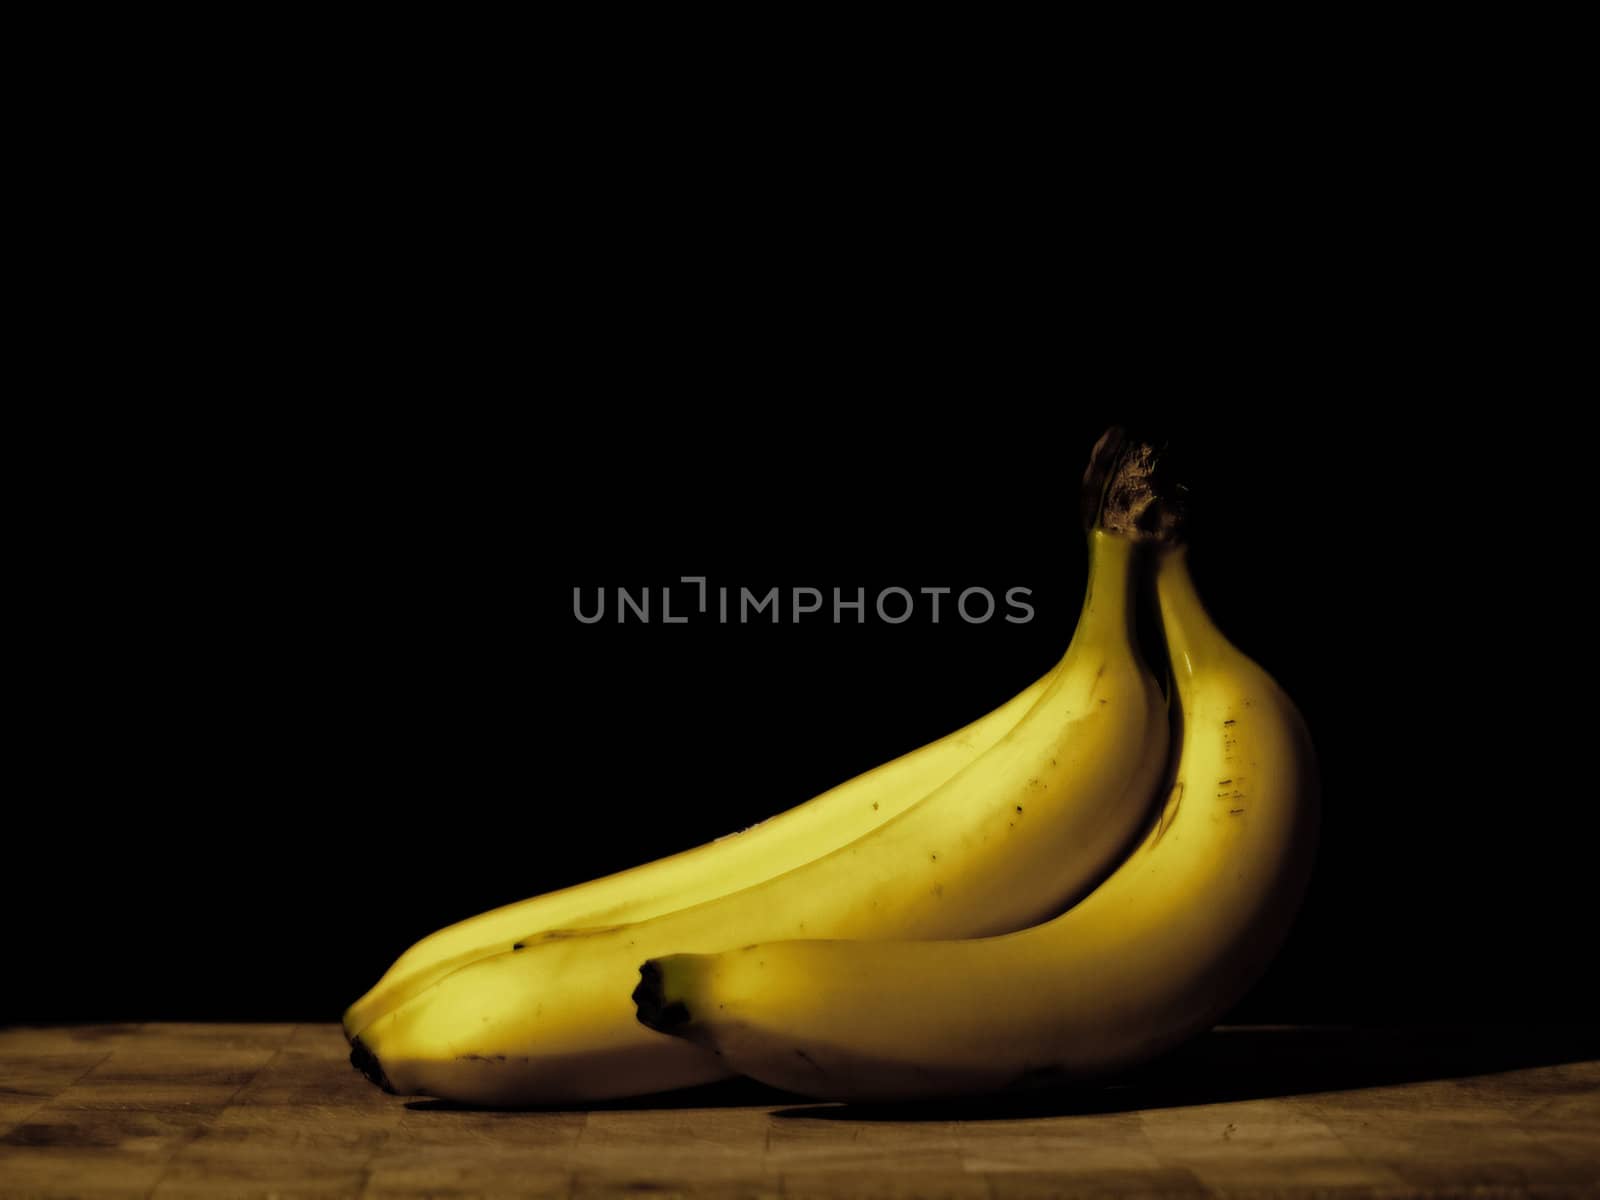 Bananas on Black by watamyr